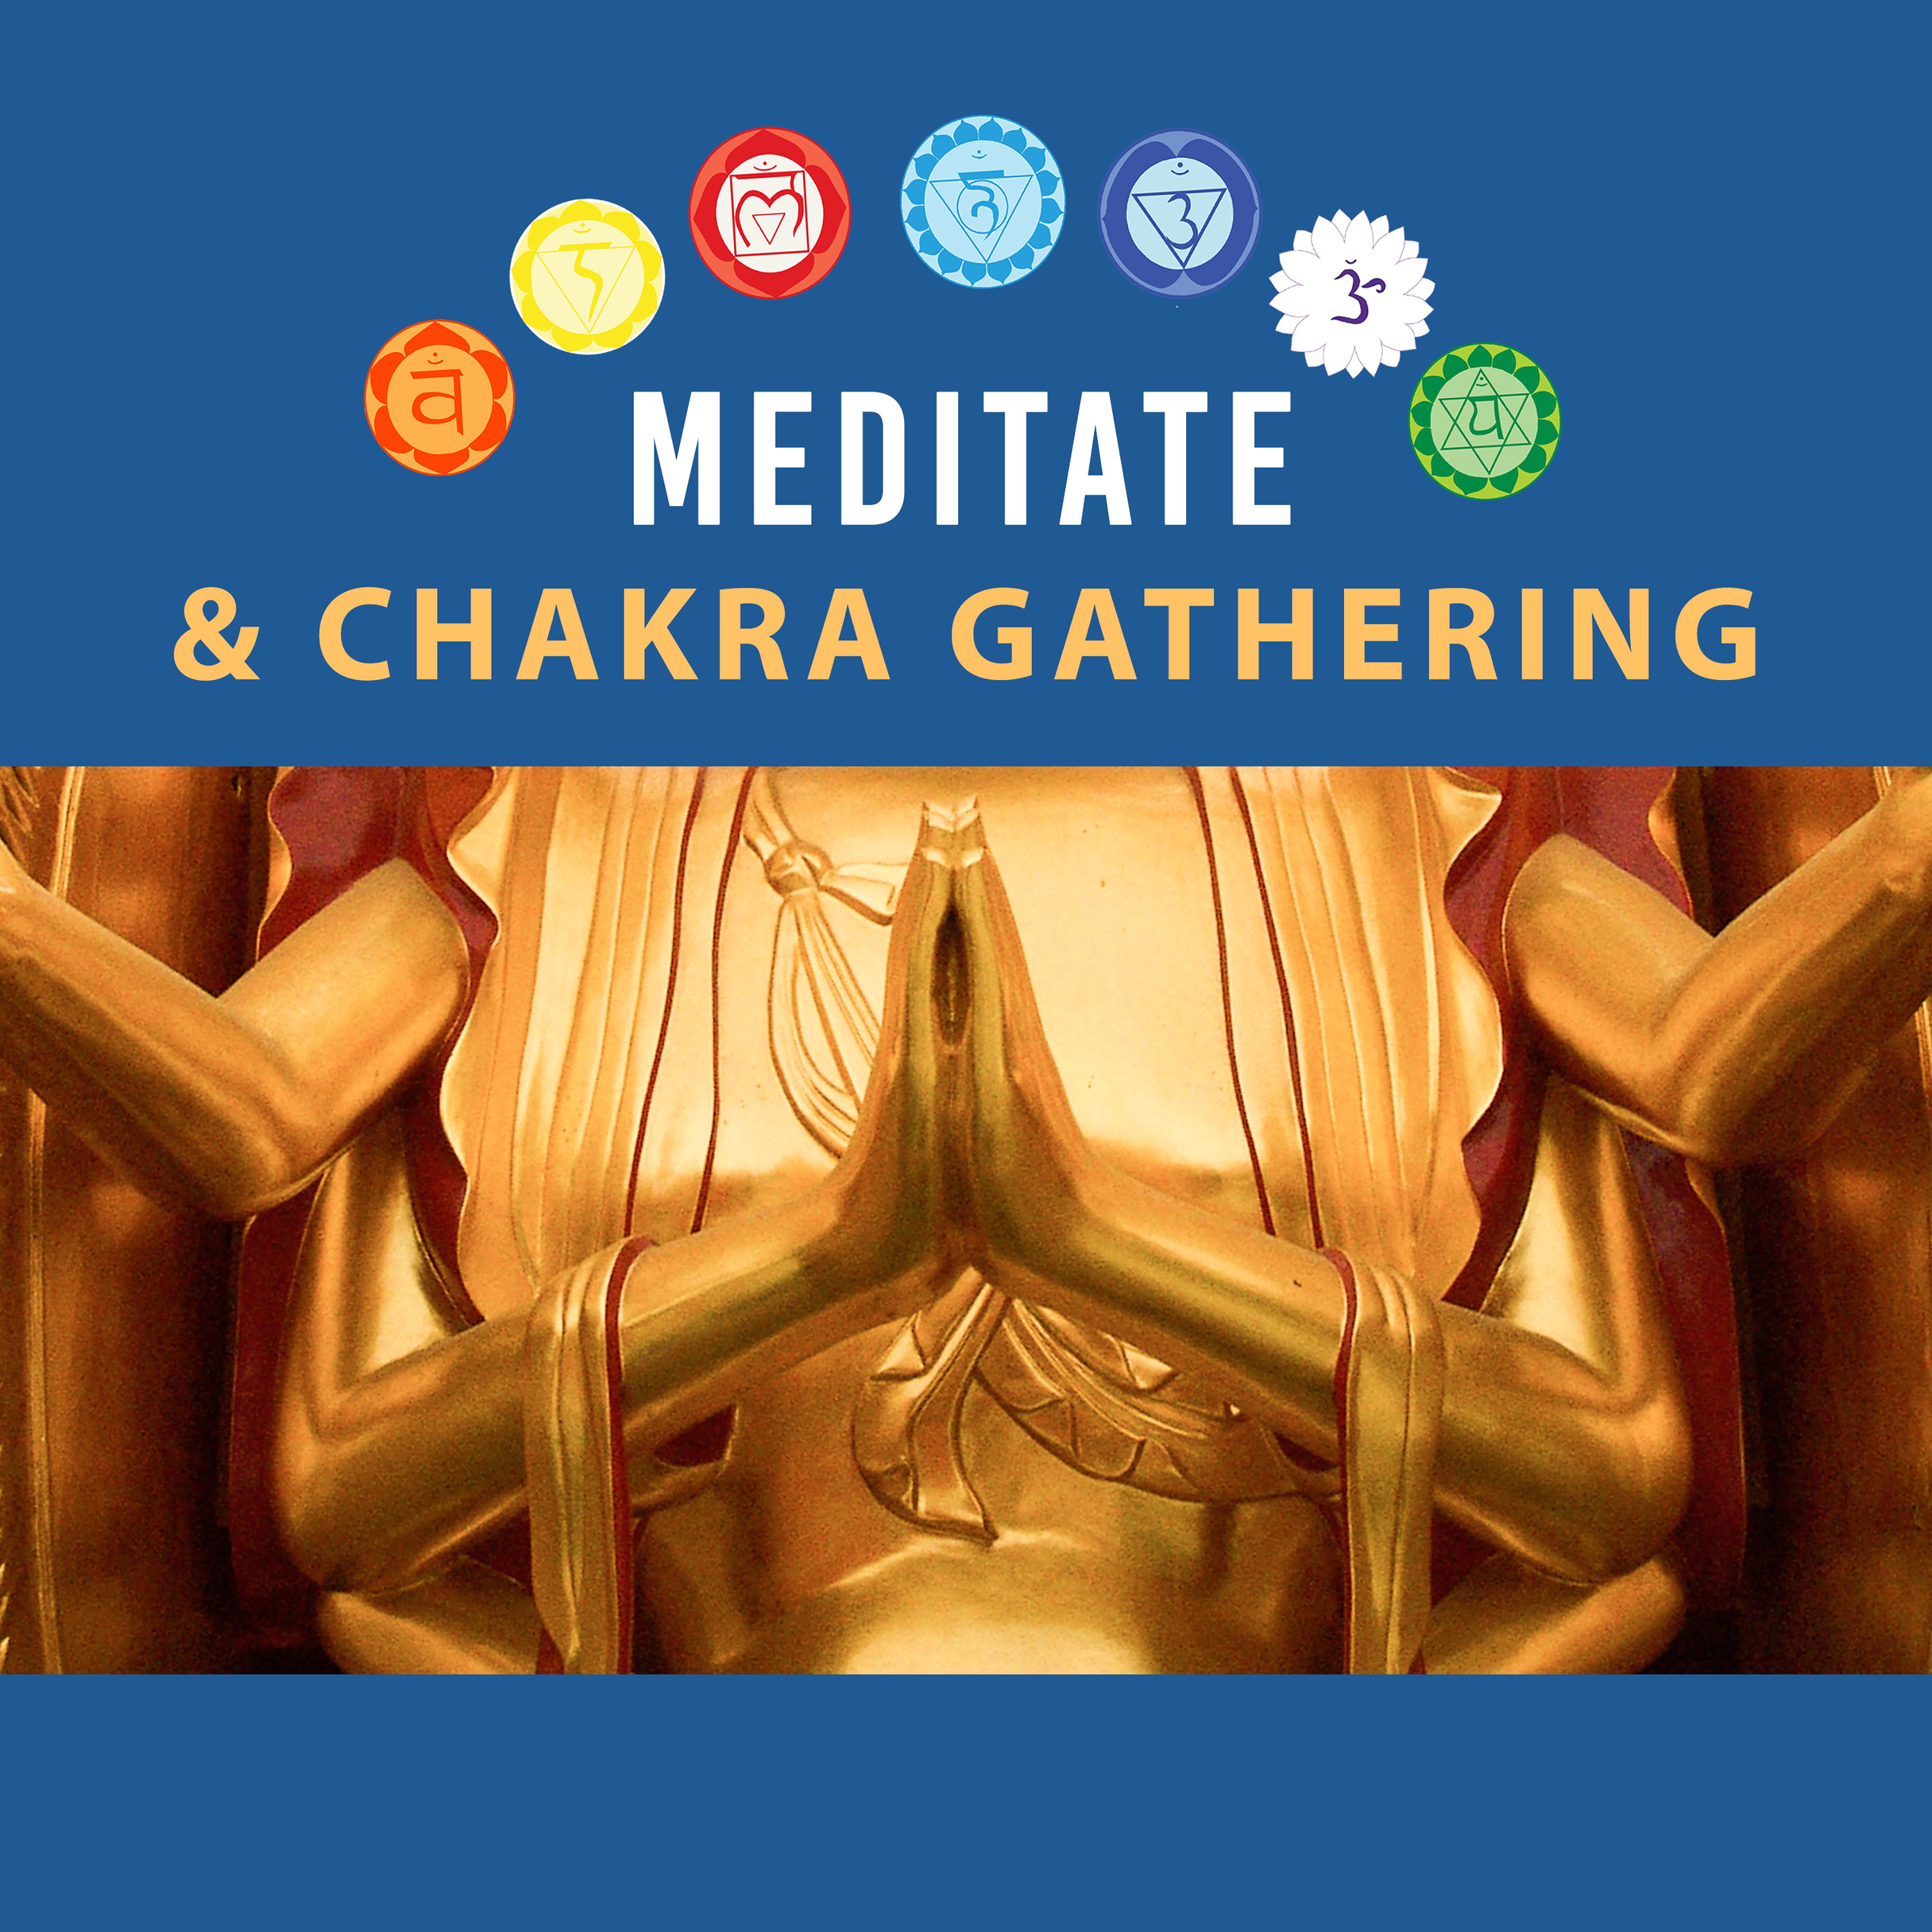 Meditate & Chakra Gathering – Buddha Lounge, Meditation Sounds to Relax, Spirit Journey, Inner Rest